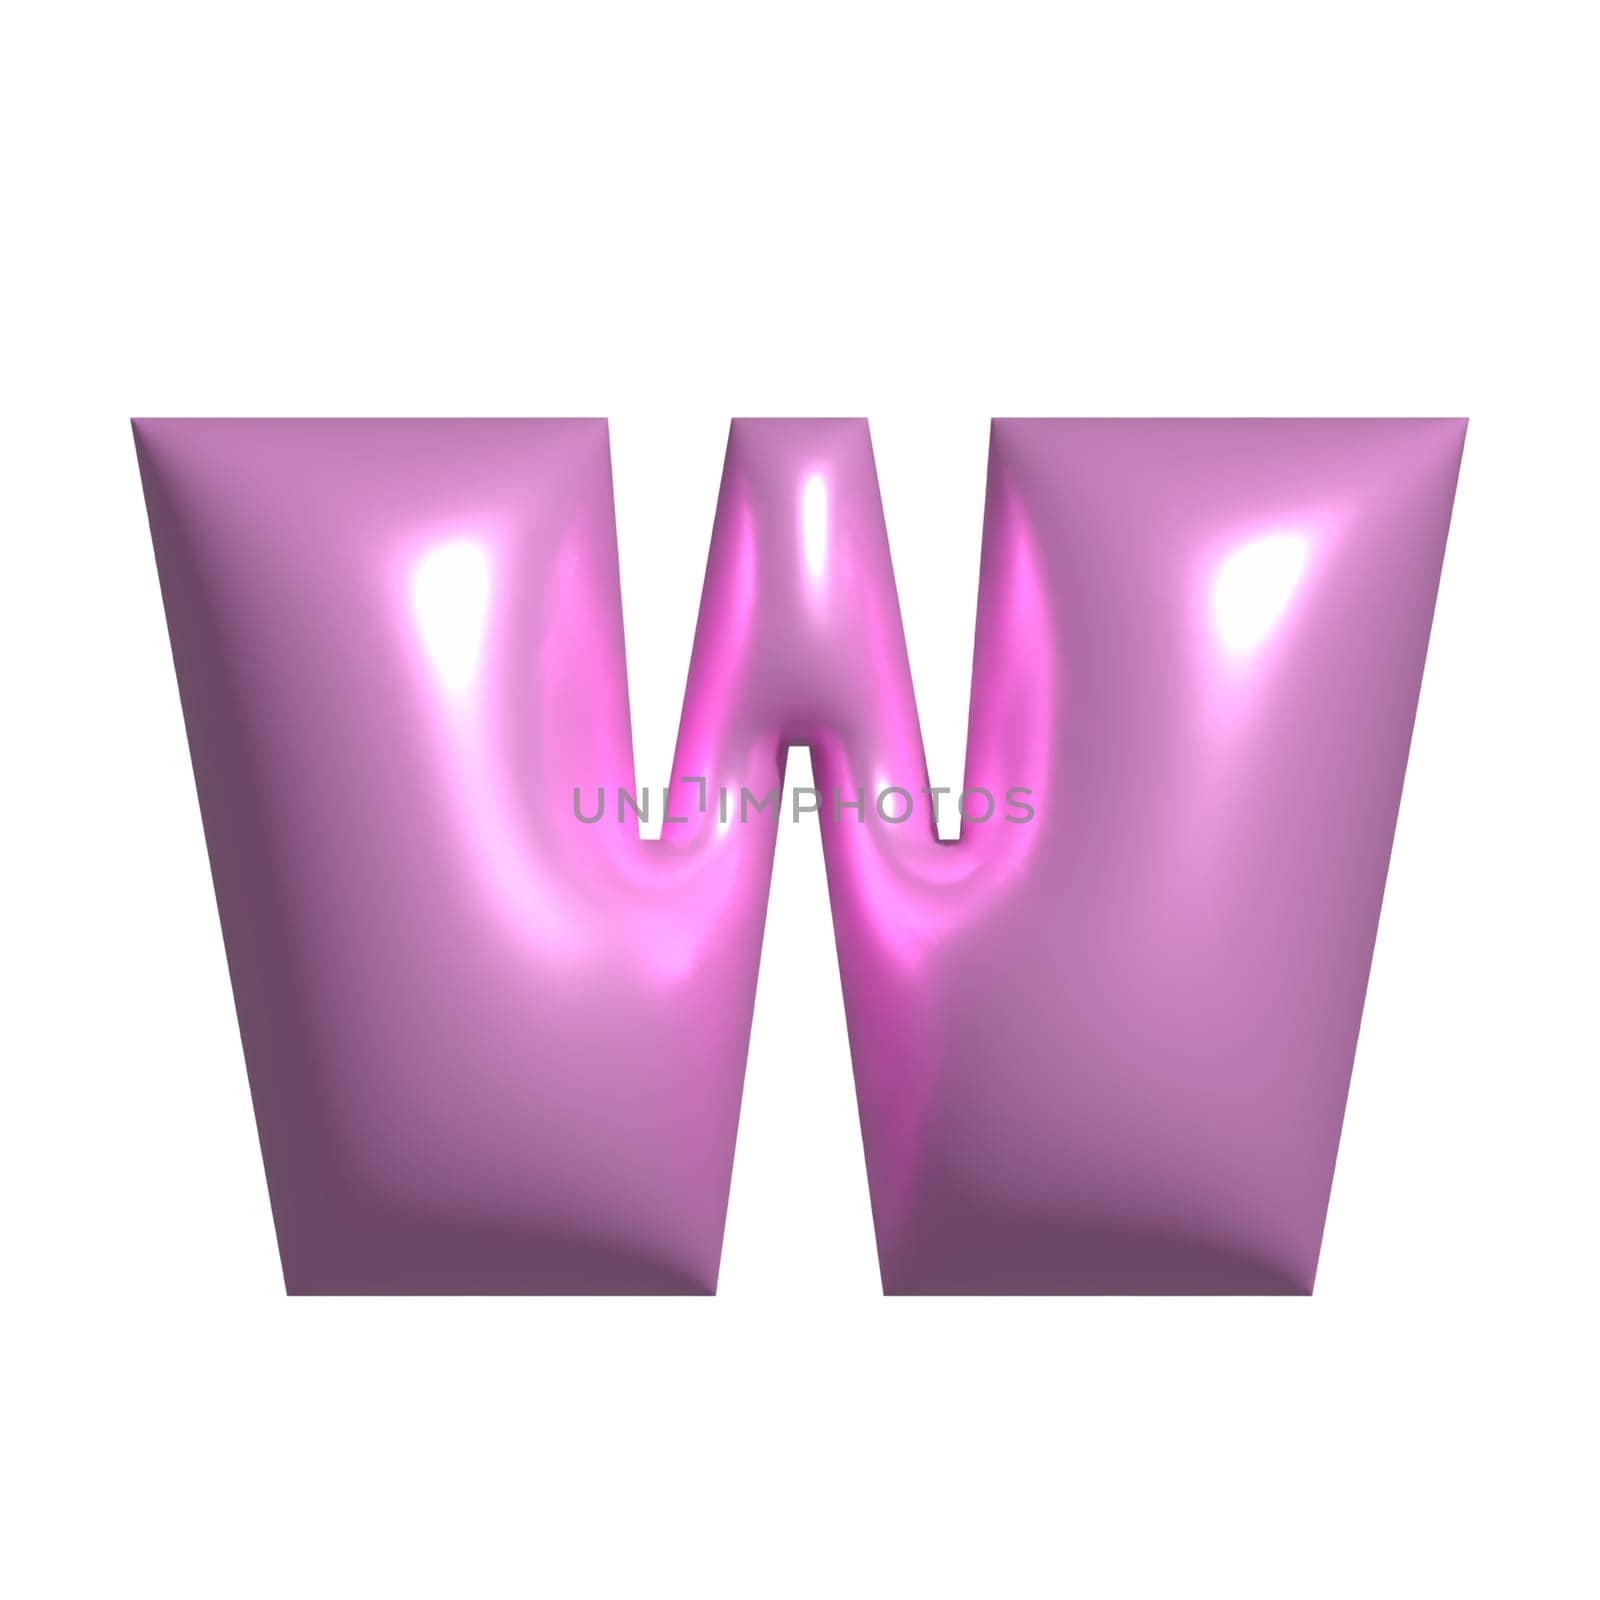 Pink shiny metal shiny reflective letter W 3D illustration